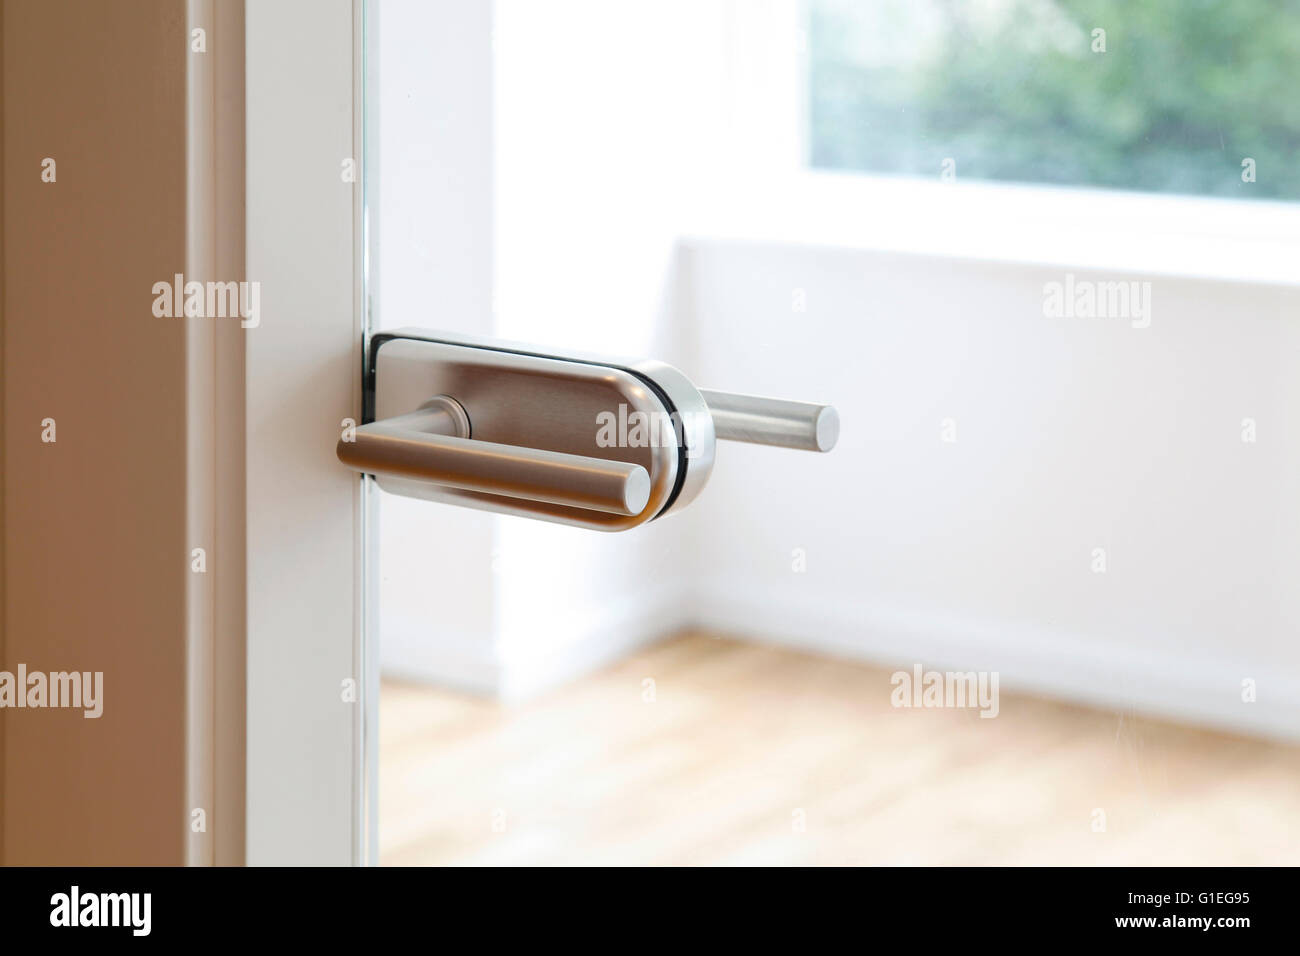 A stainless steel doorknob on a glass door. Stock Photo